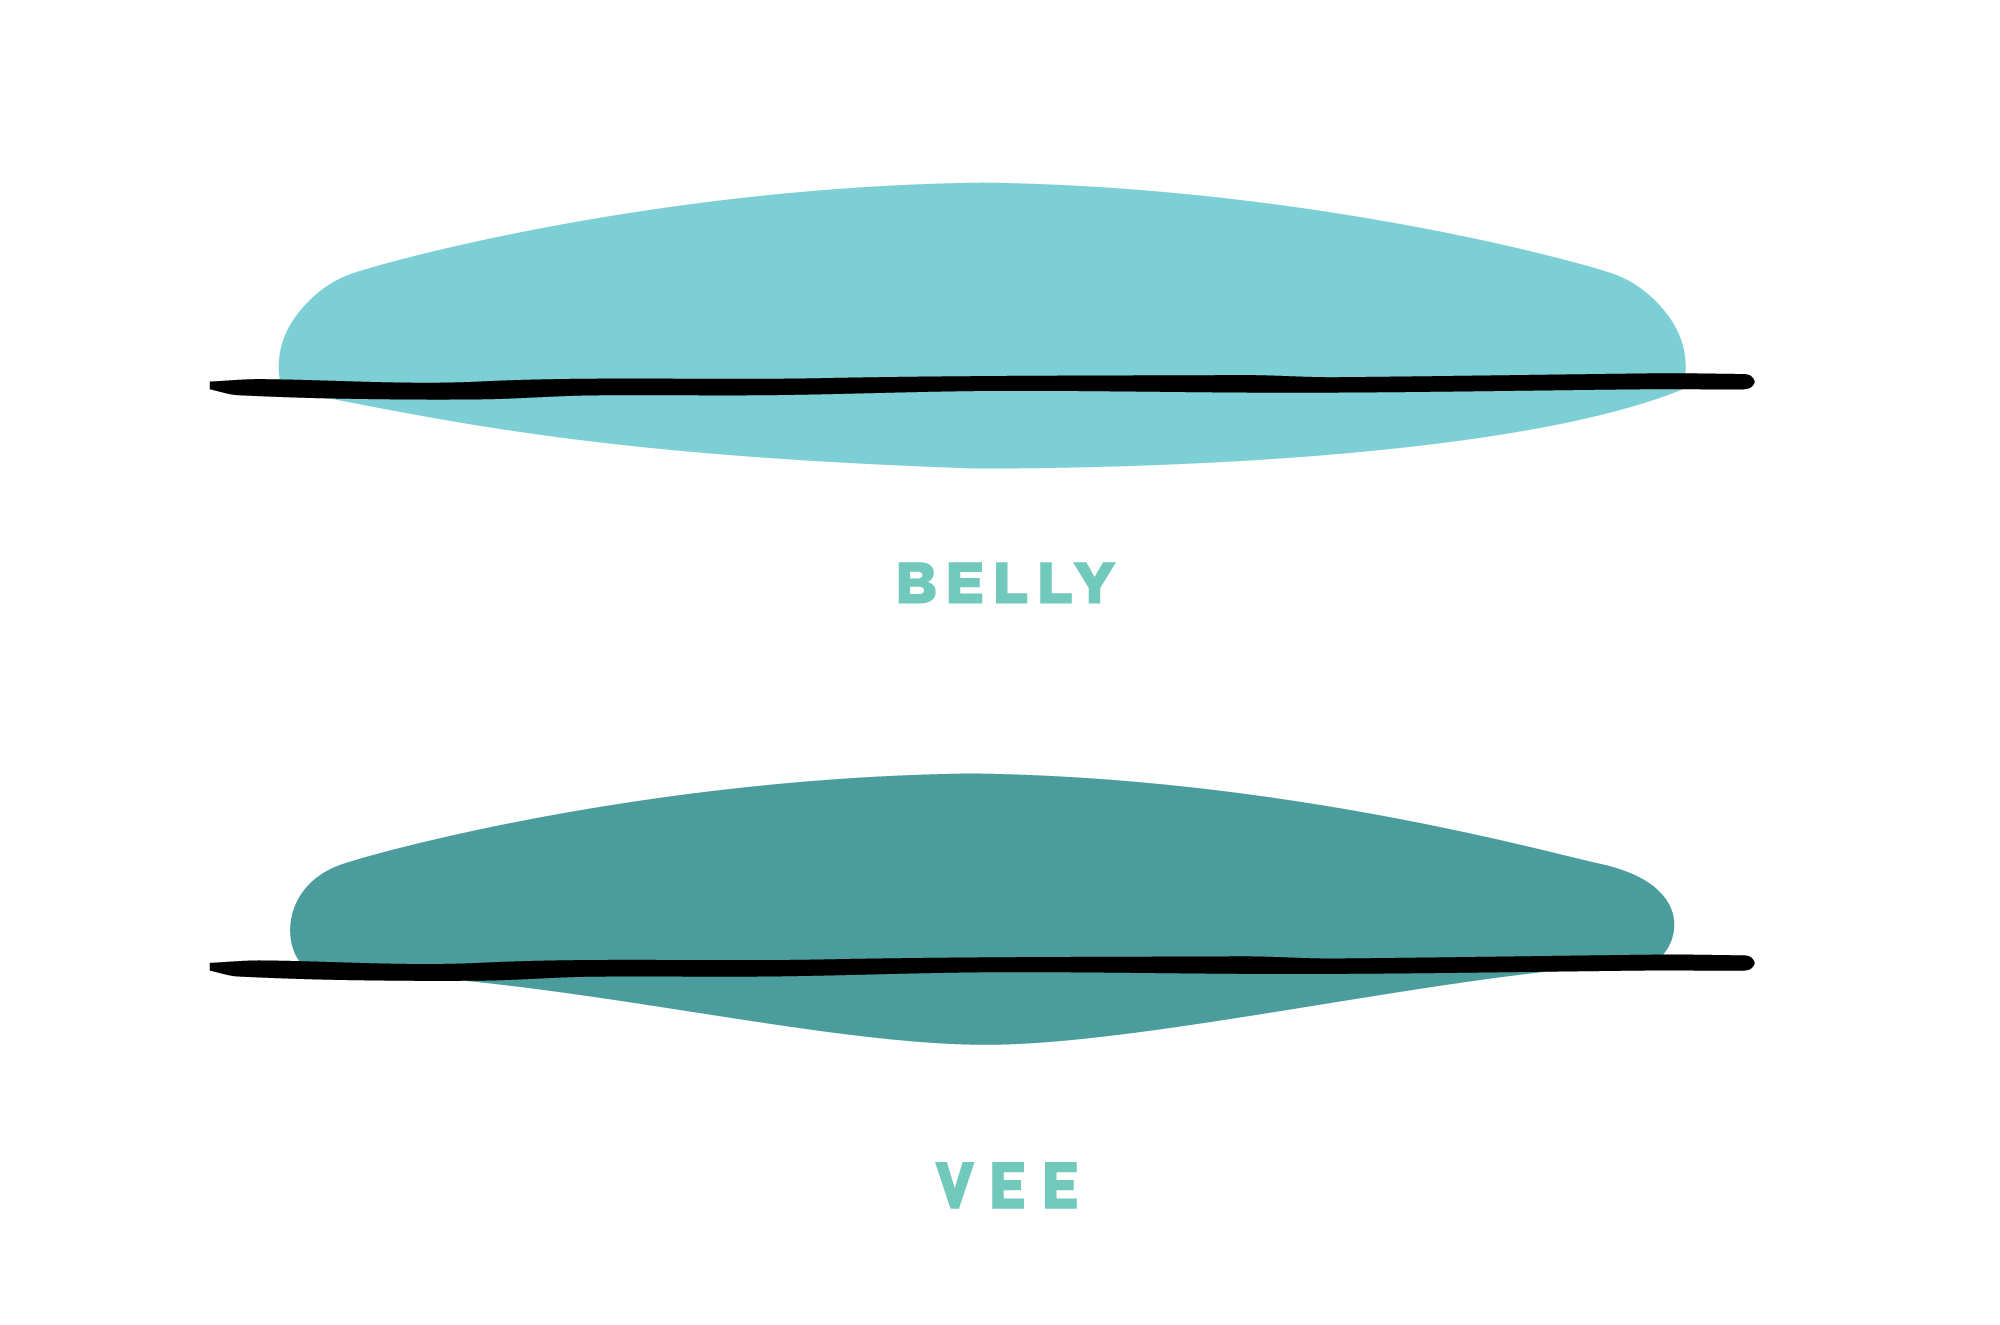 Illustration Convexes Surfboard Bottom Contours